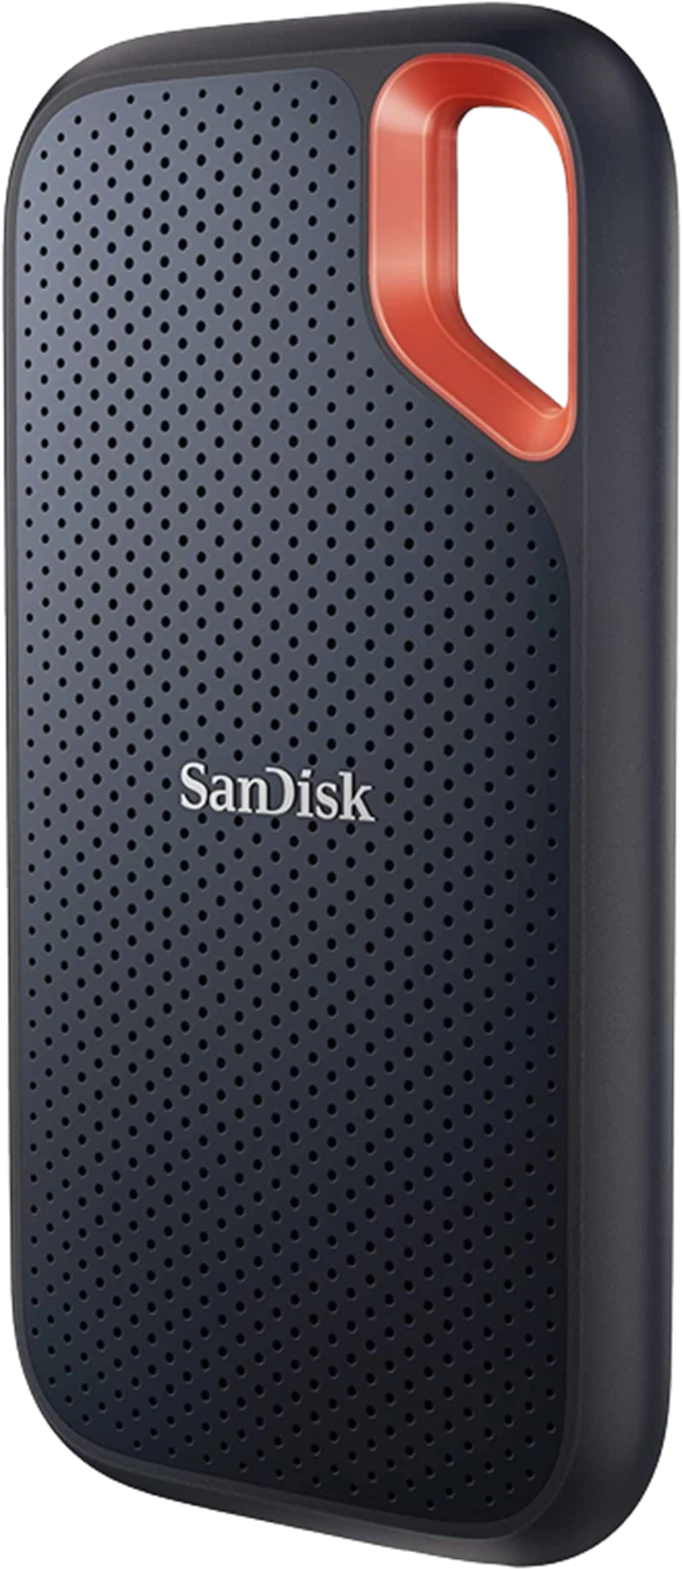 Sandisk Extreme 2TB portable external SSD